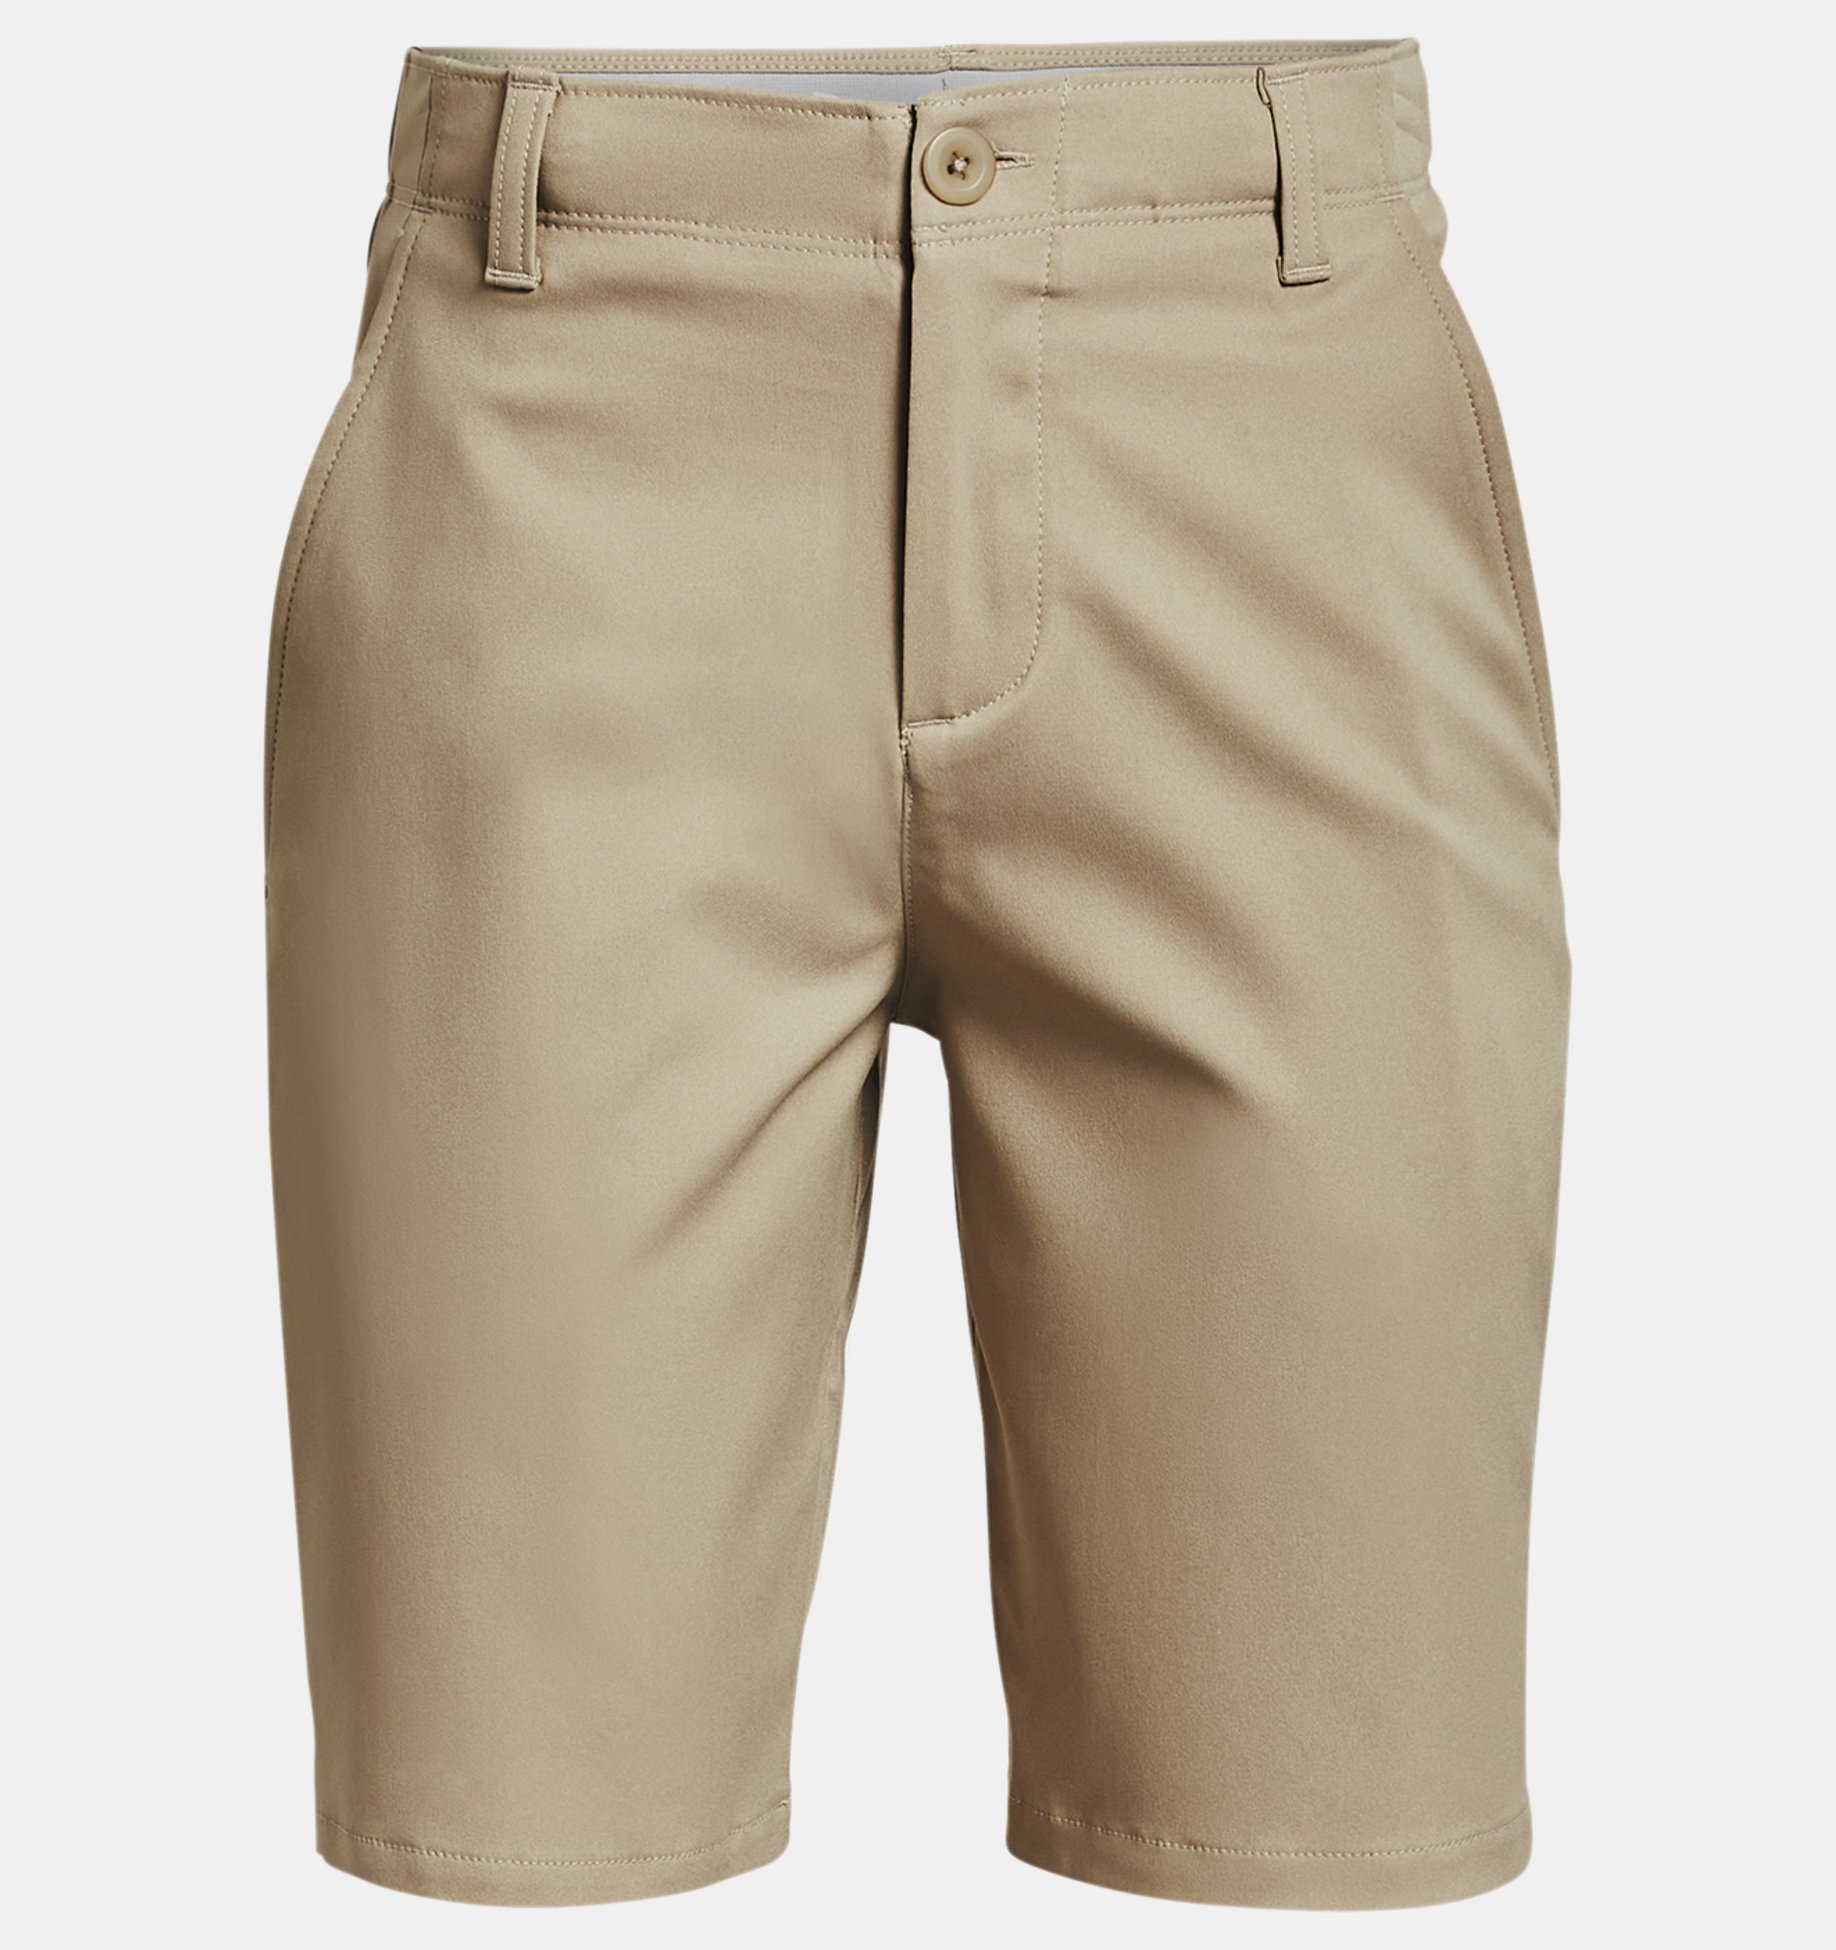 Boys' UA Golf Shorts